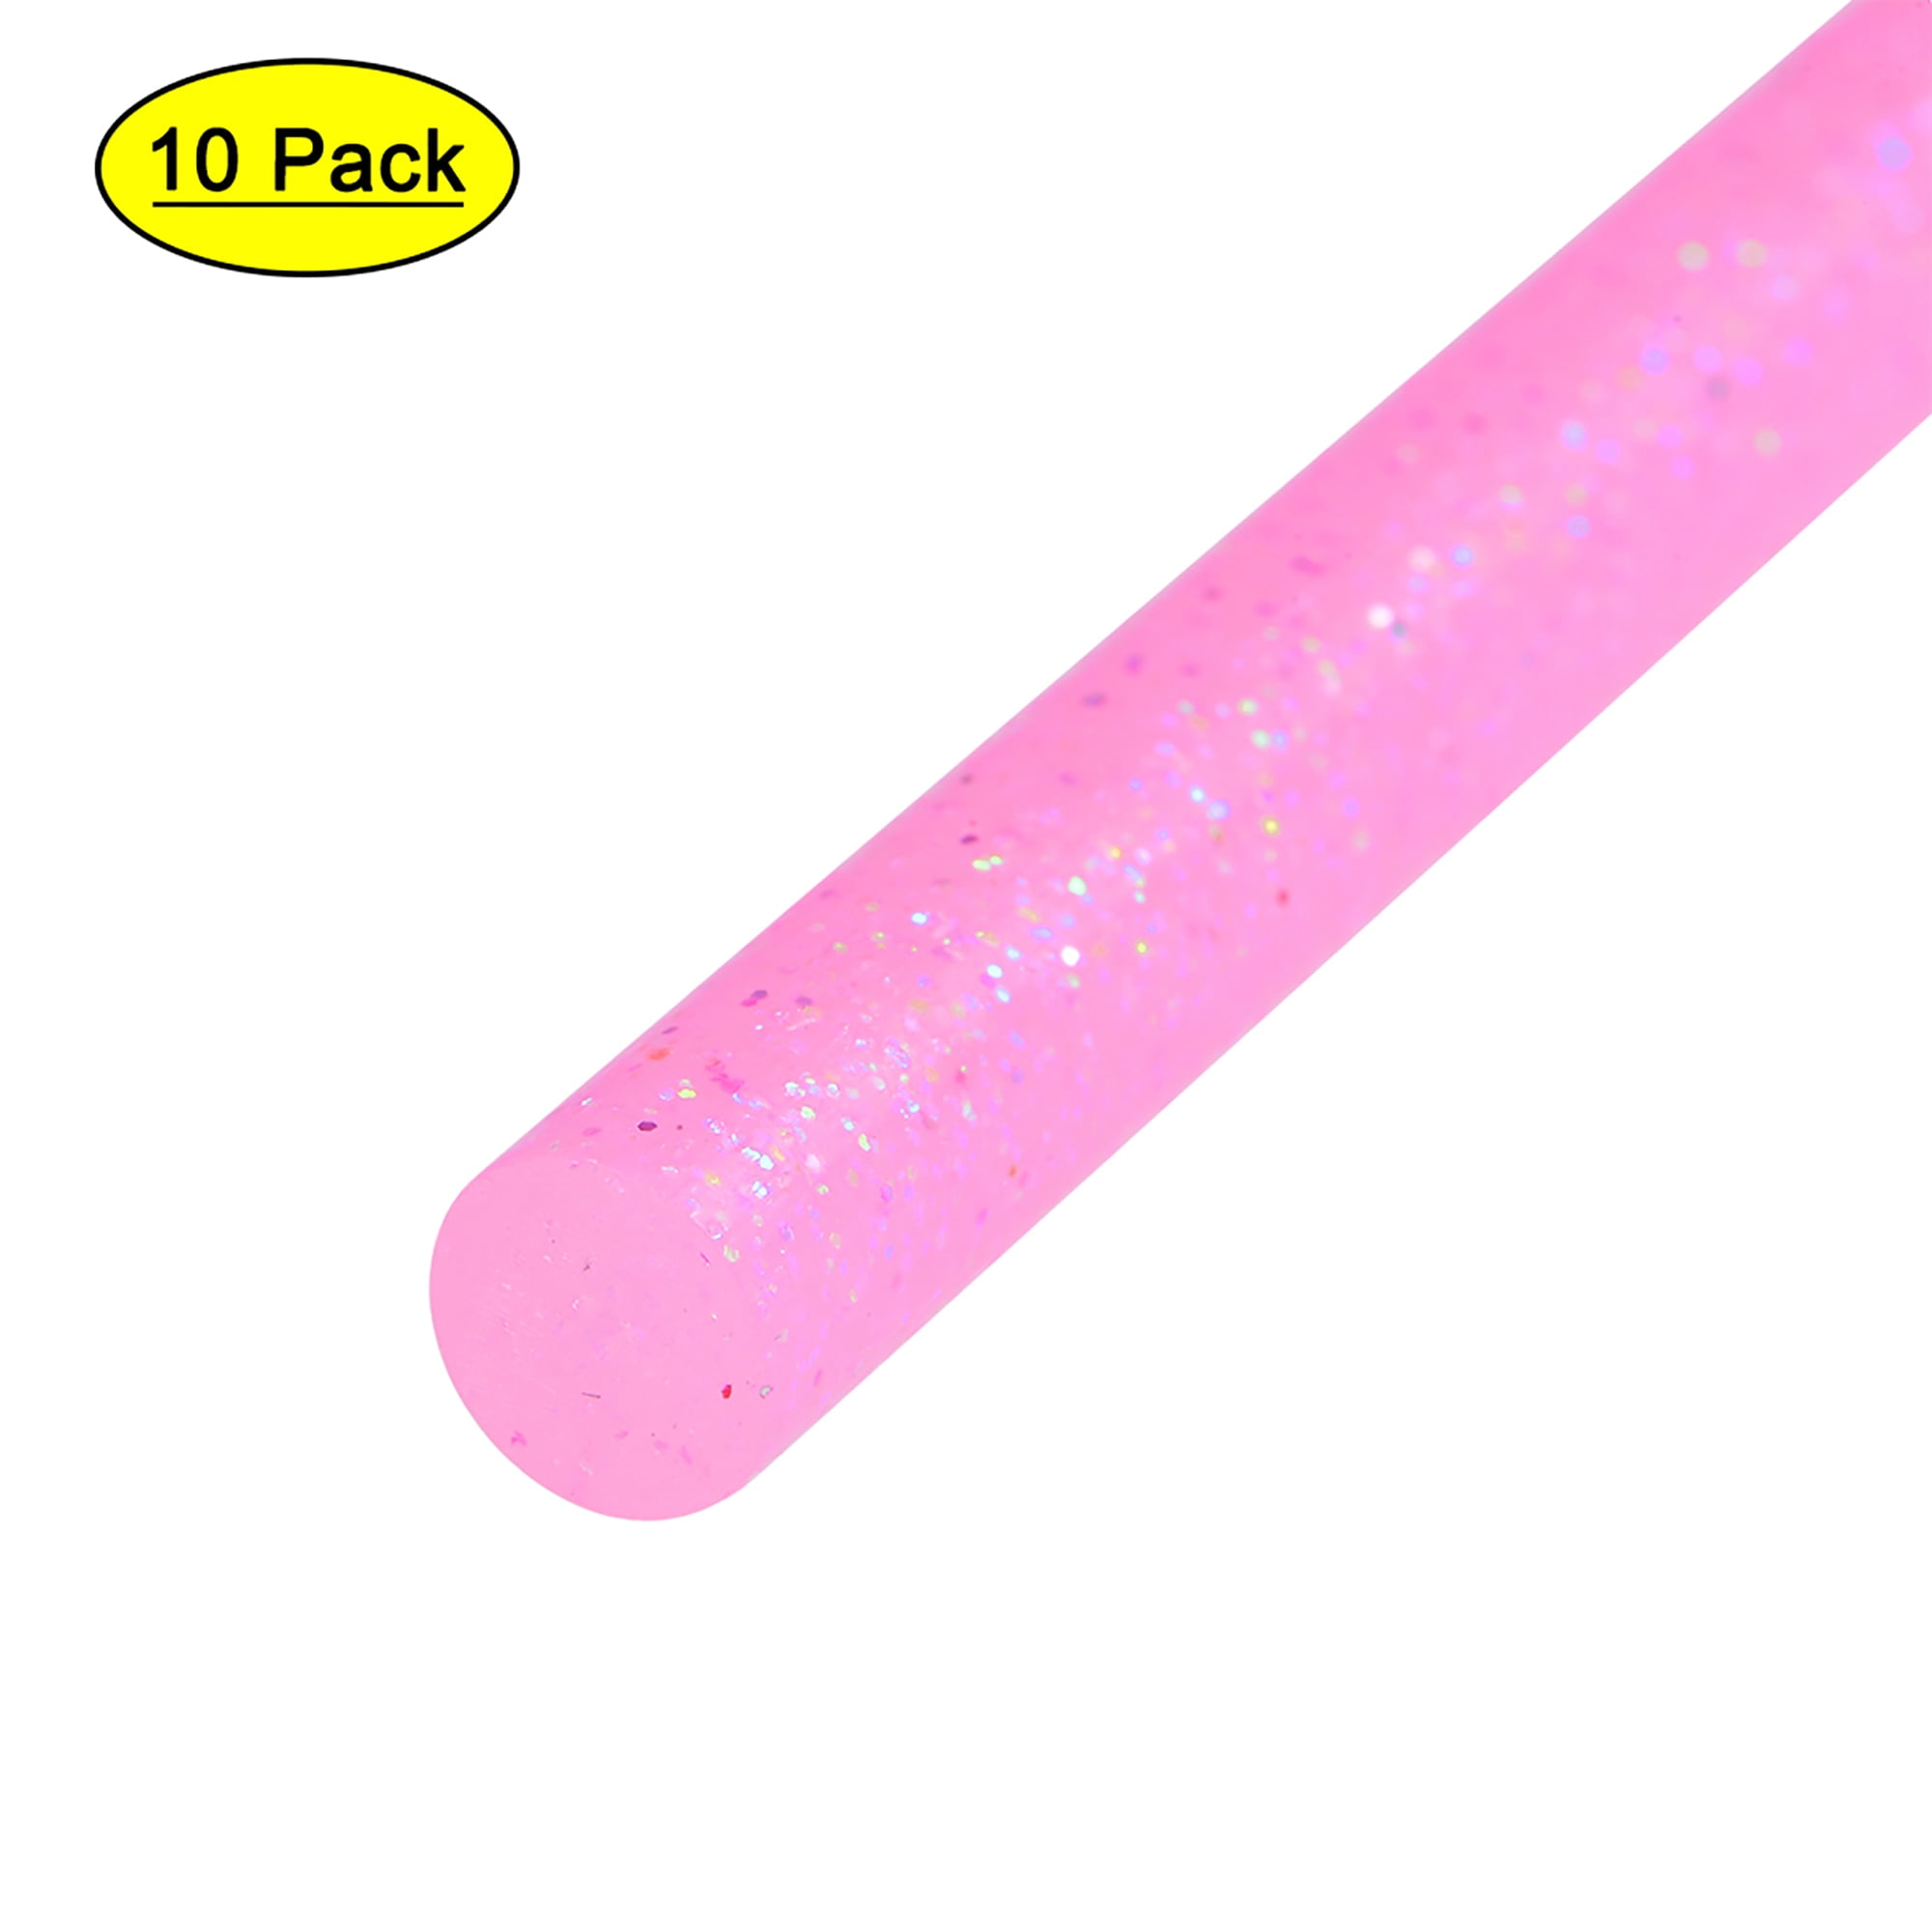 GlueSticksDirect Translucent Pink Colored Glue Sticks Mini X 4 24